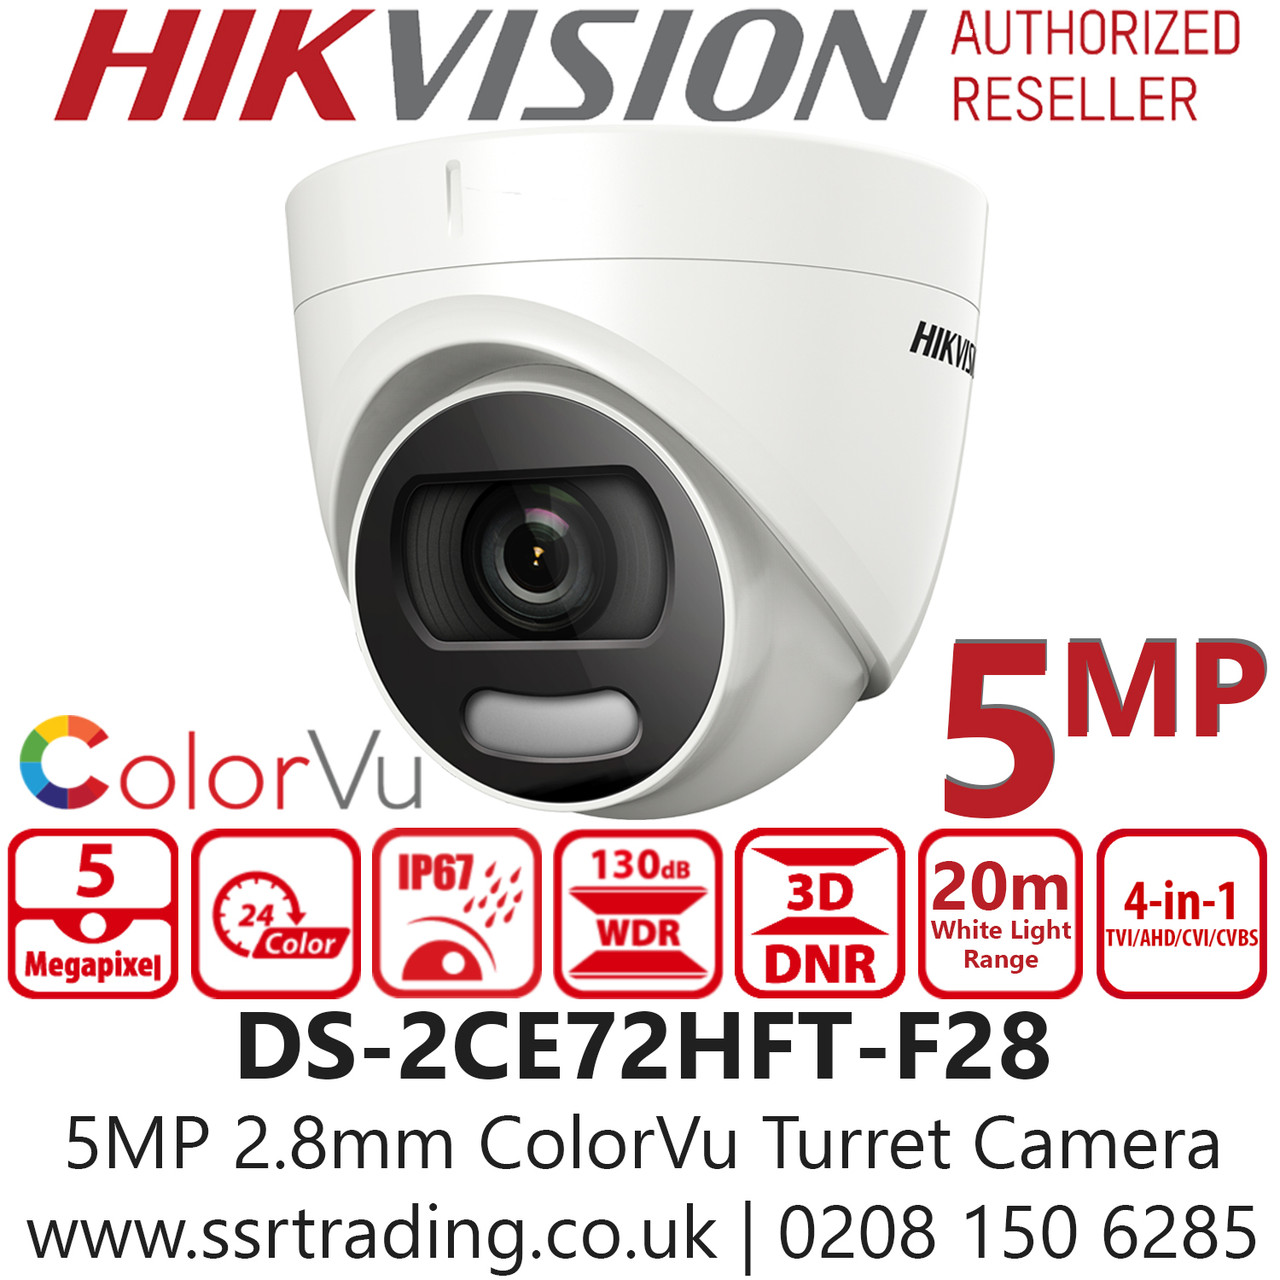 Hikvision Hikvision 5MP ColorVu CCTV KIT Turret Camera  IP67 20M 2CE72HFT-F28 Night Color 